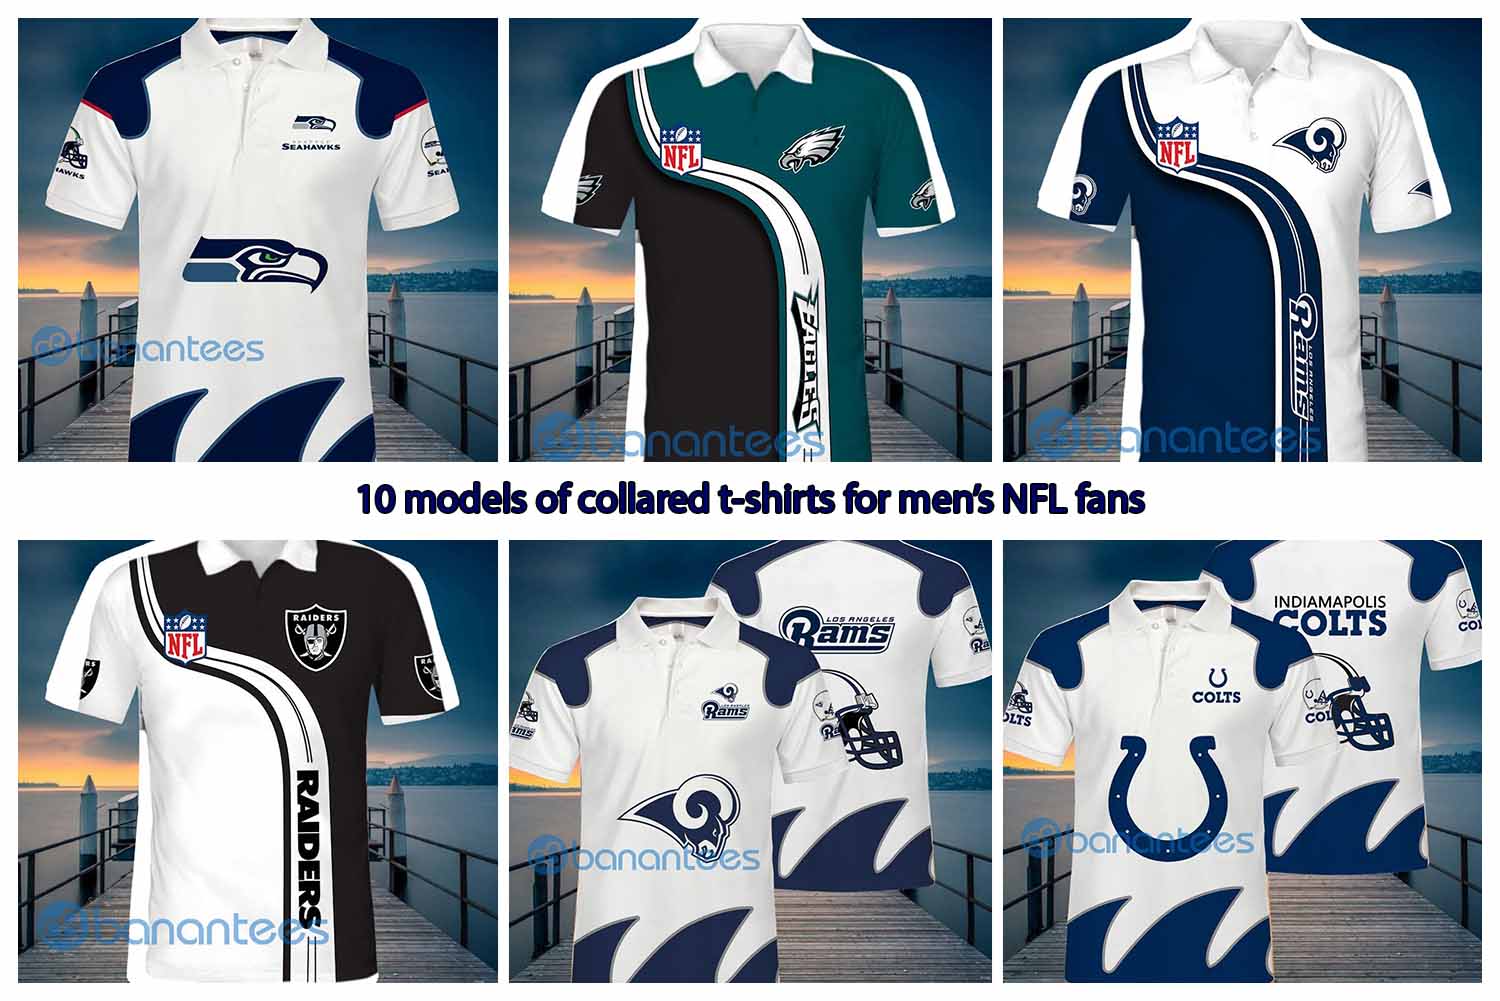 10 models of collared t-shirts for men’s NFL fans